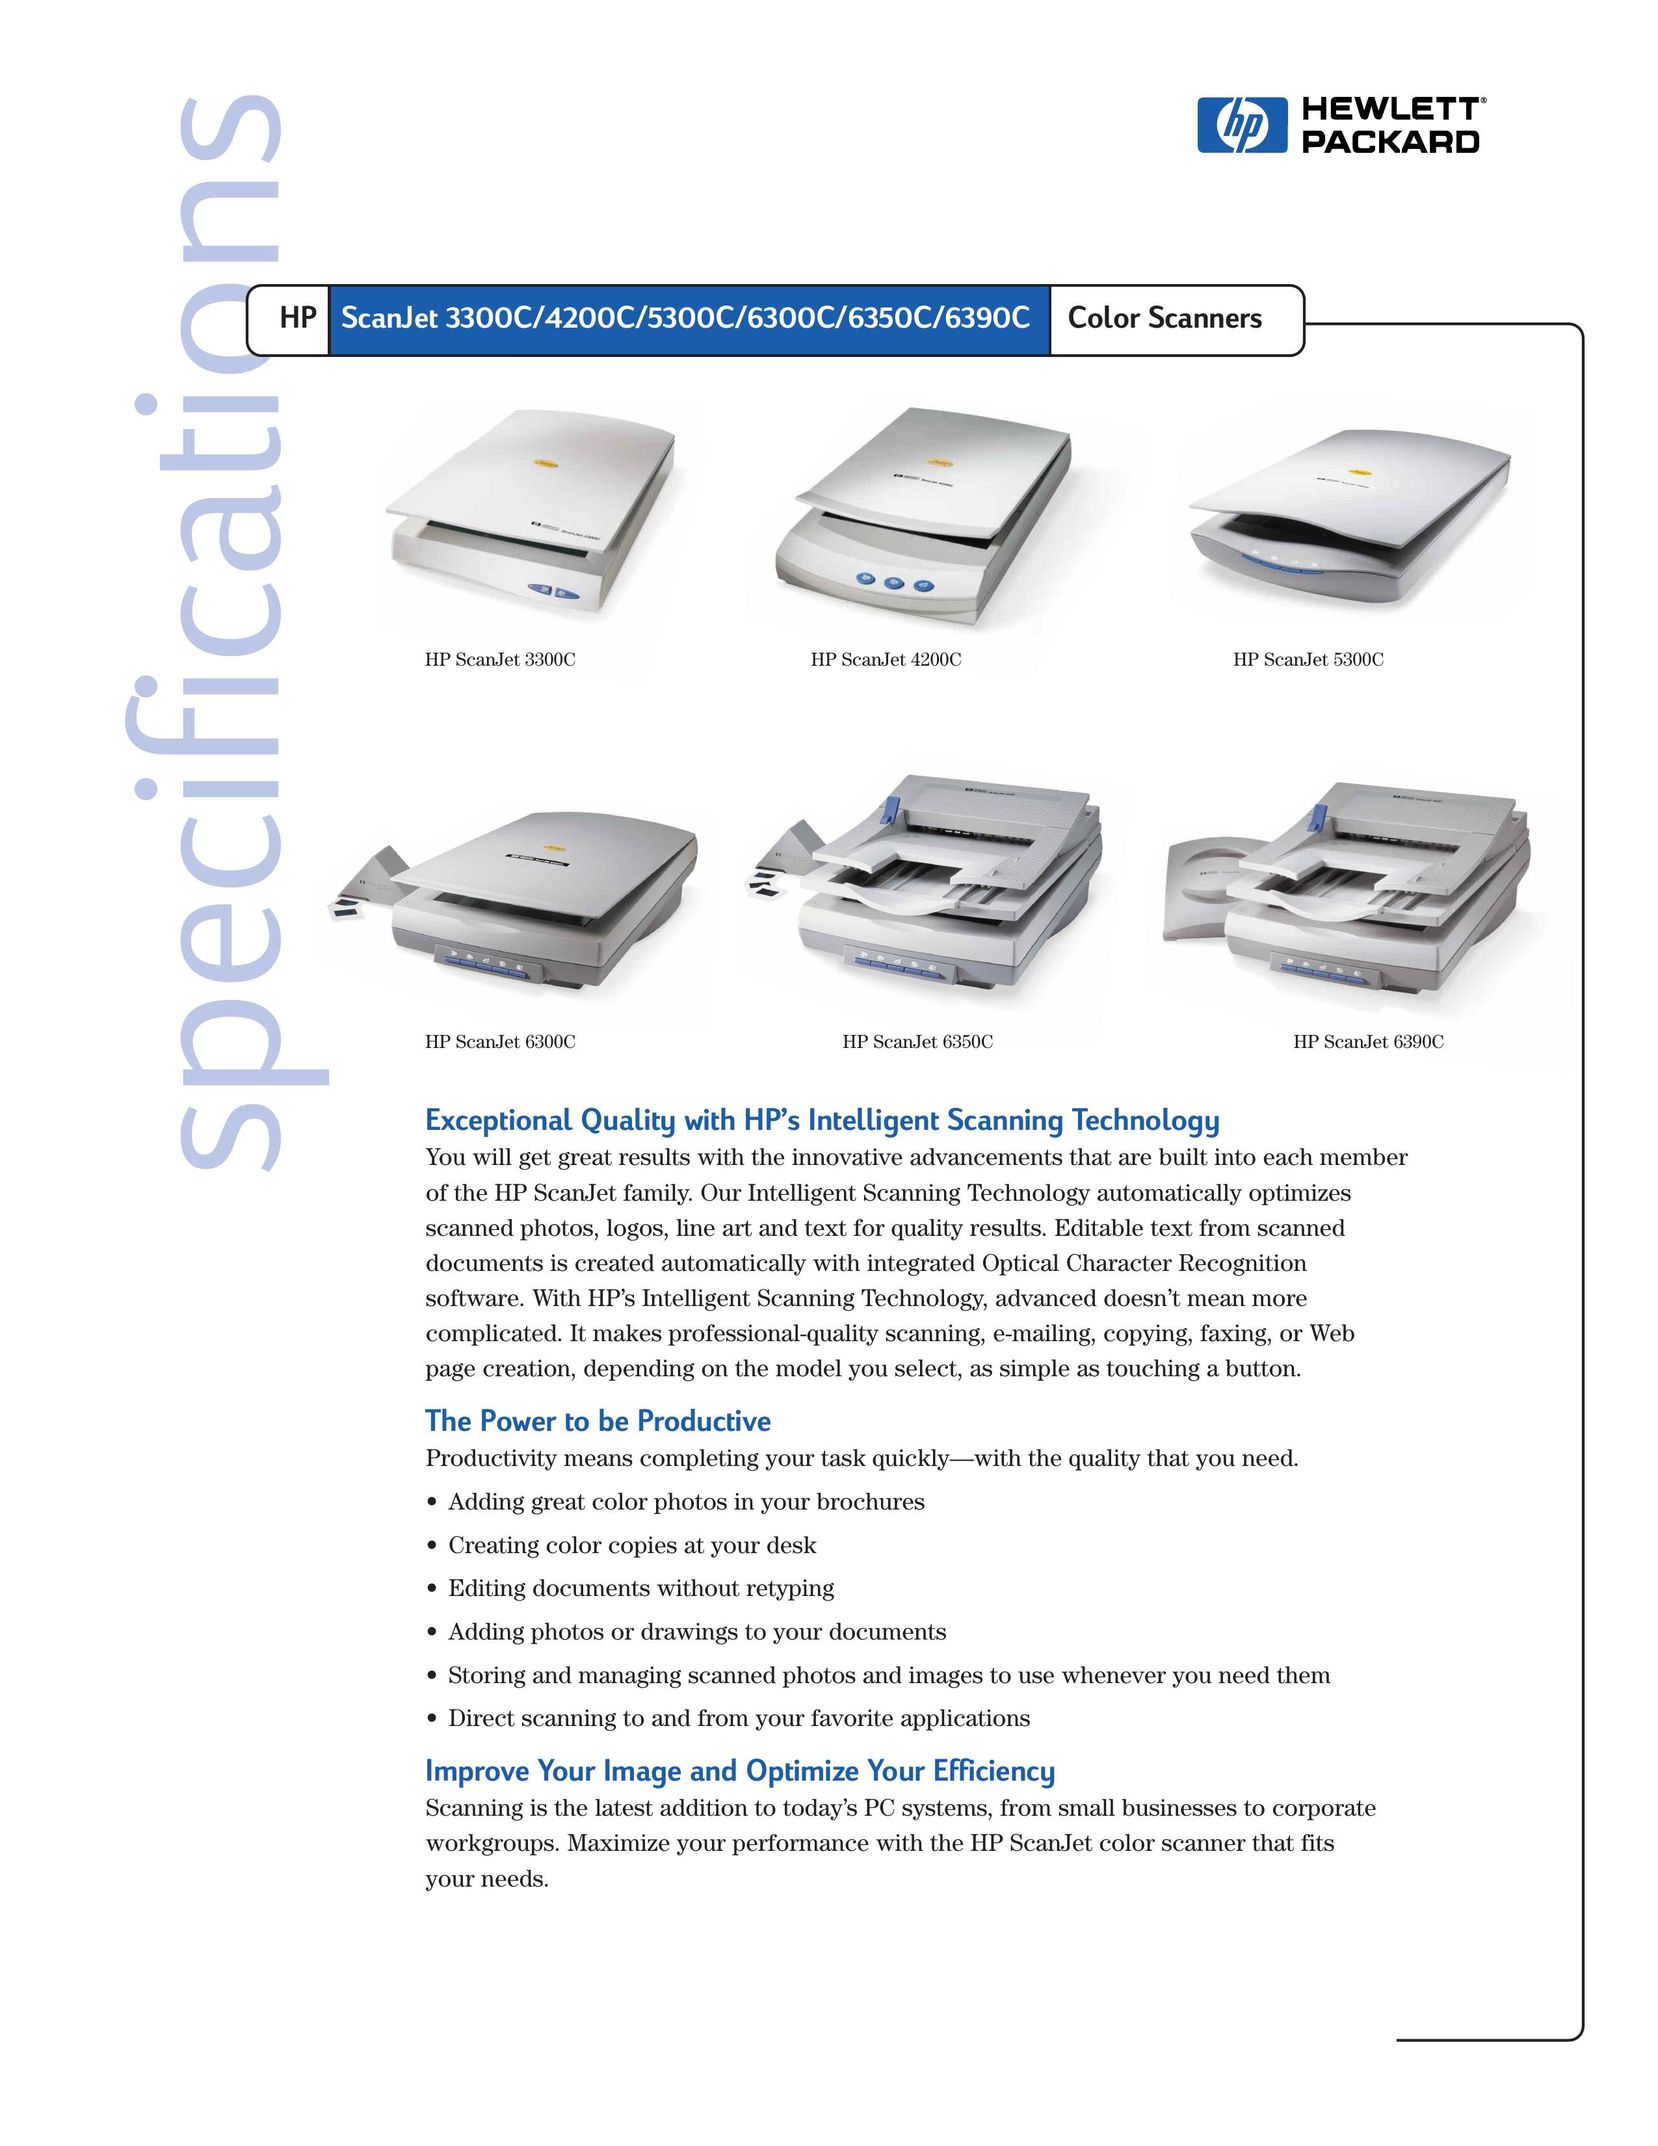 HP (Hewlett-Packard) 4200c Scanner User Manual